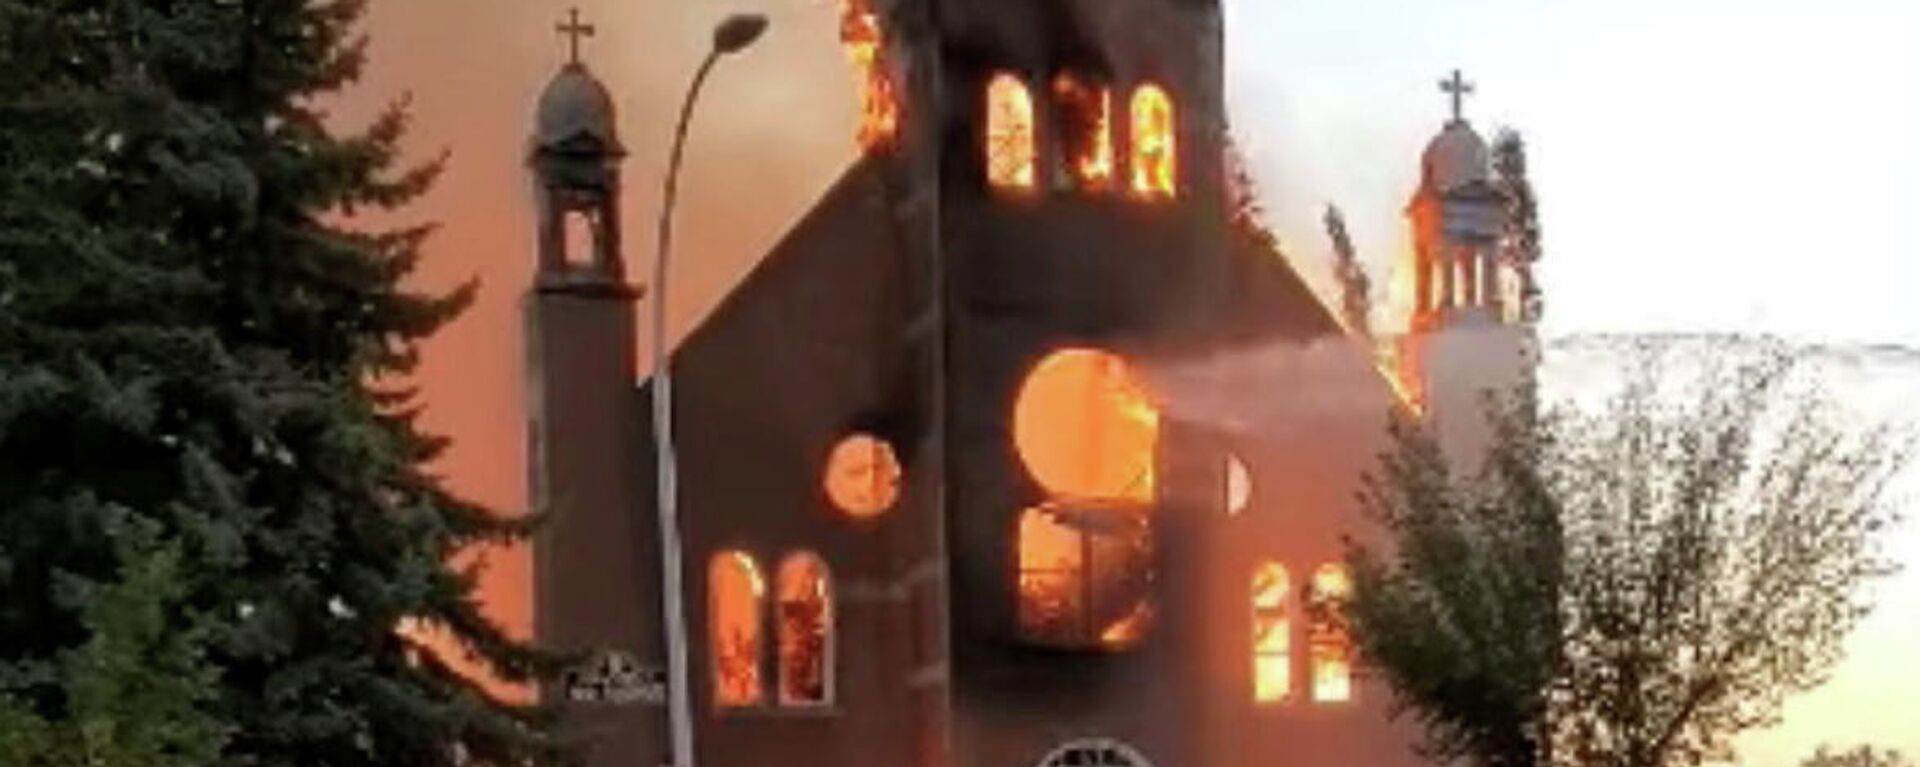 Incendio en una iglesia de Morinville, Canadá - Sputnik Mundo, 1920, 02.07.2021